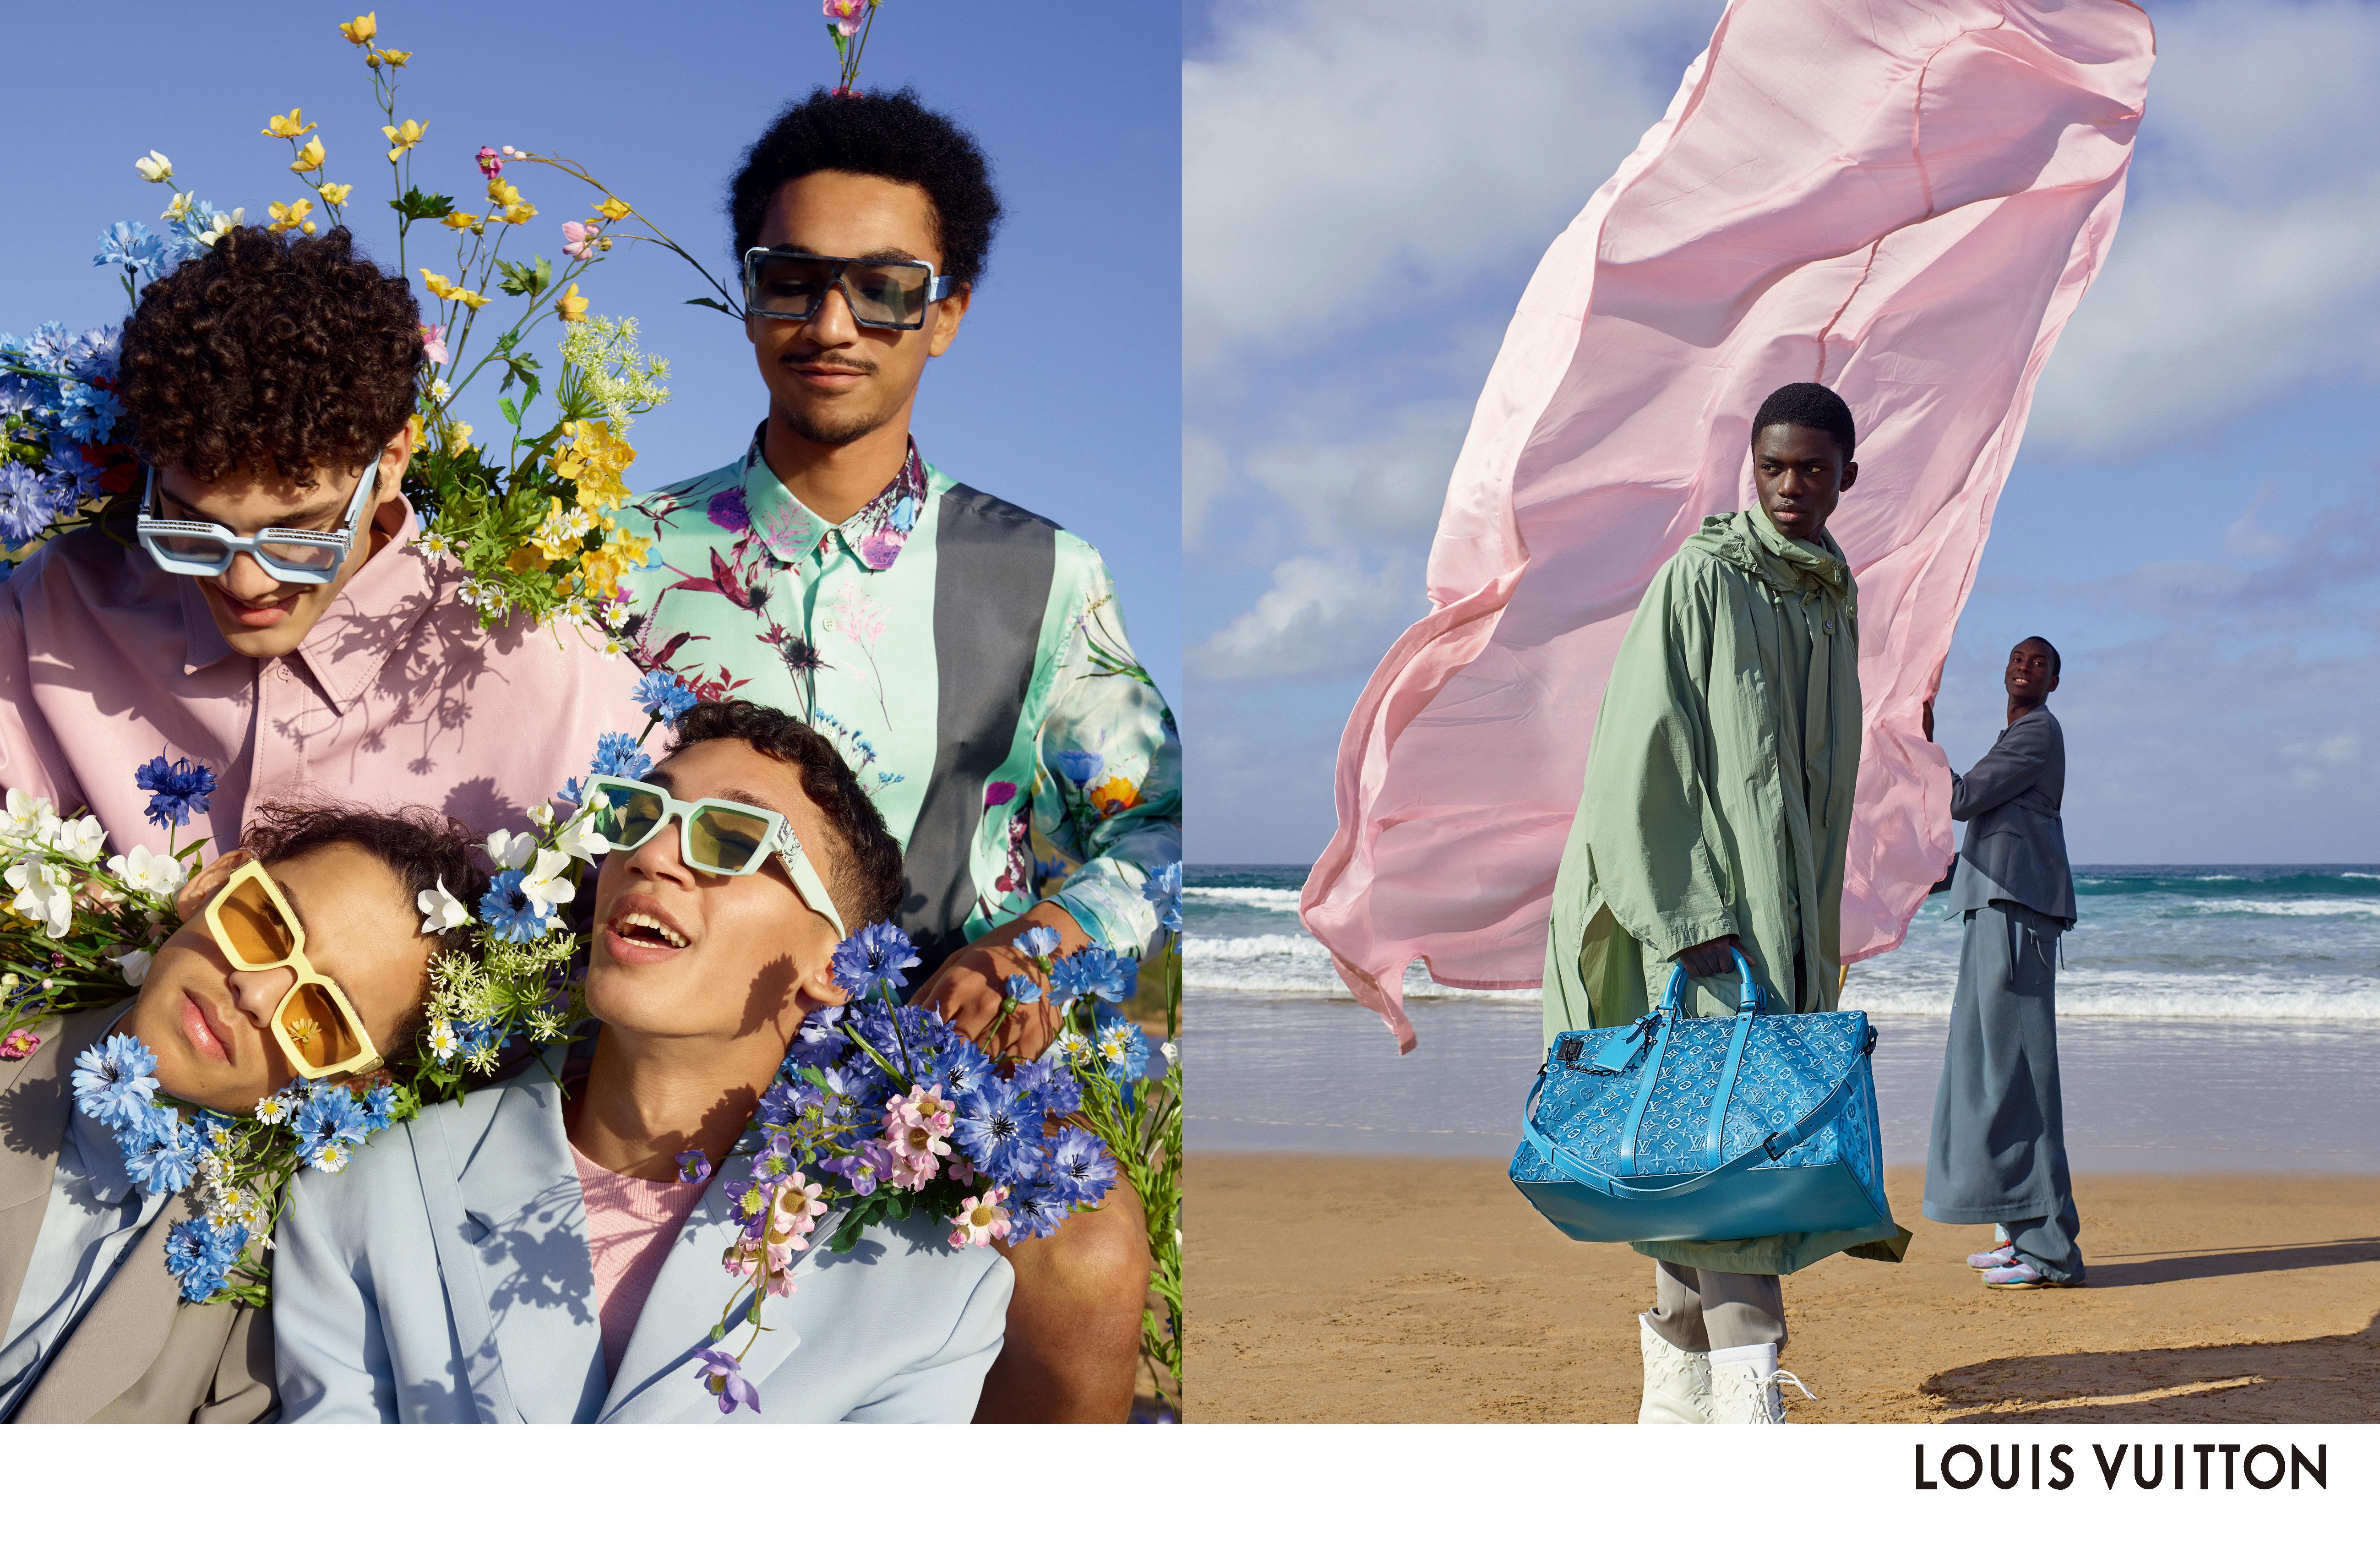 Louis Vuitton Spring/Summer 2021 Collection Campaign